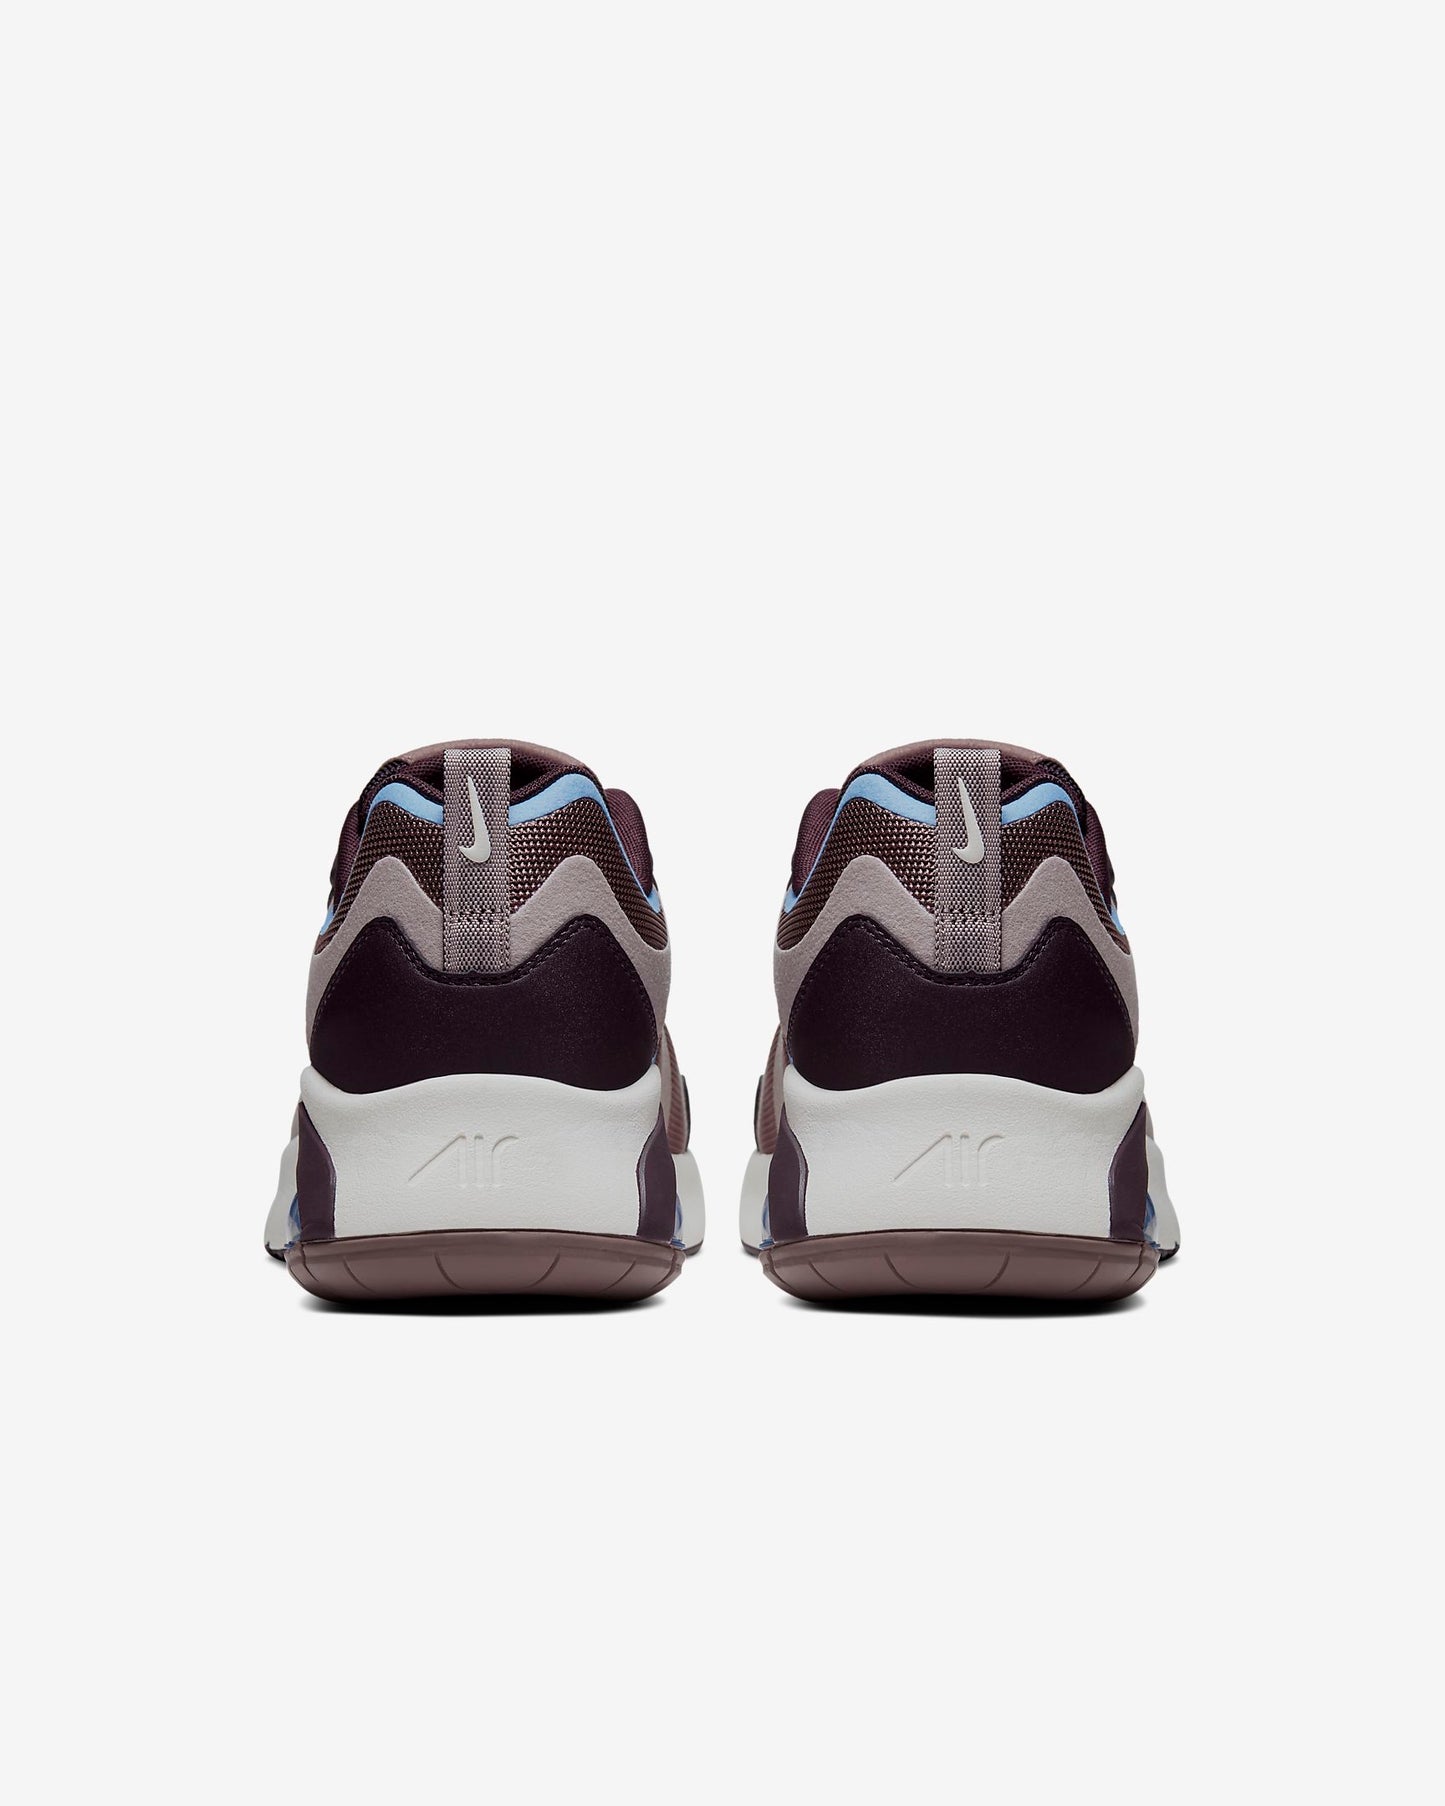 Men's Nike Air Max 200 Casual Shoes, AQ2568 200 Multiple Sizes Plum Eclipse/Pumice/Burgundy Ash/University